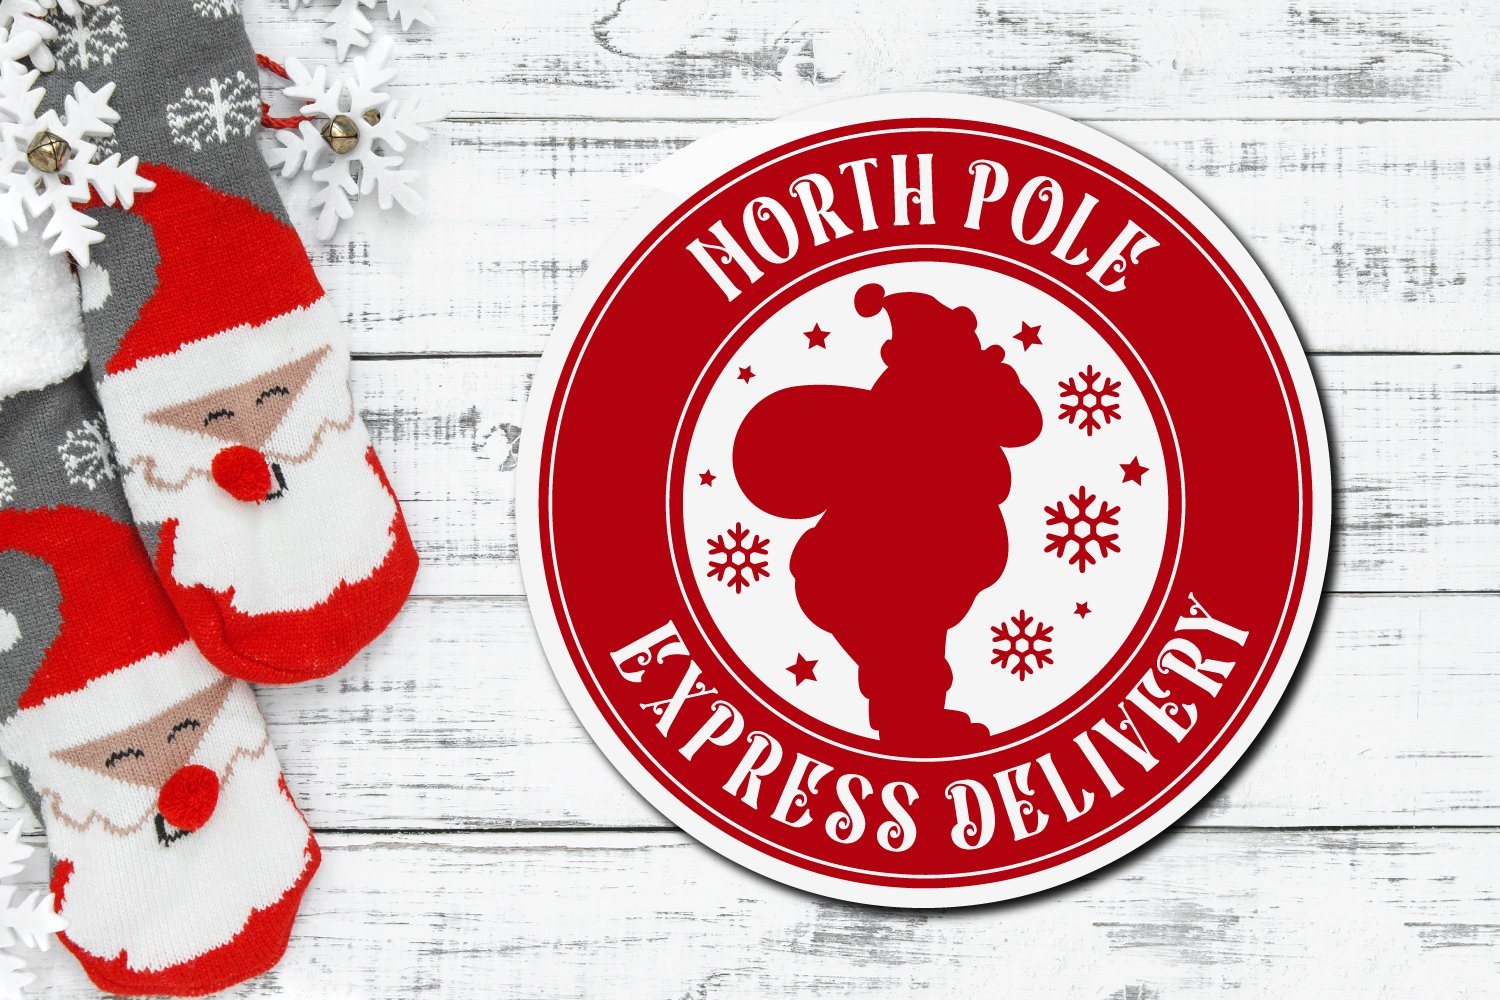 north pole stamp